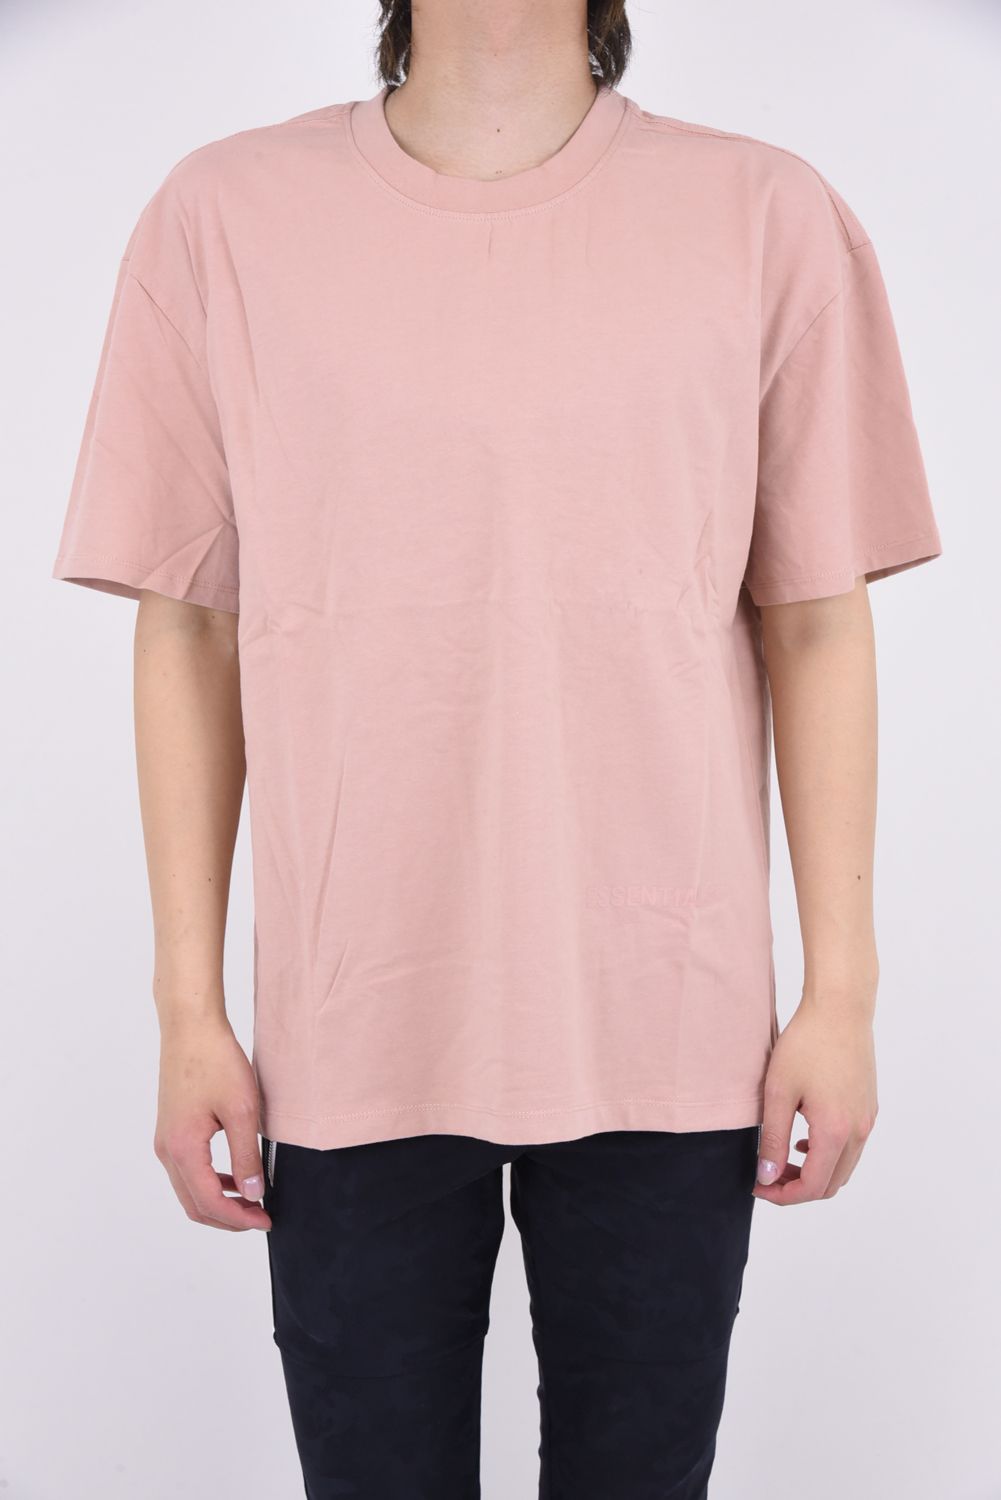 FOG ESSENTIALS BOXY T-SHIRT / リフレクタープリント クルーネック 半袖 プリントTシャツ ピンク - S